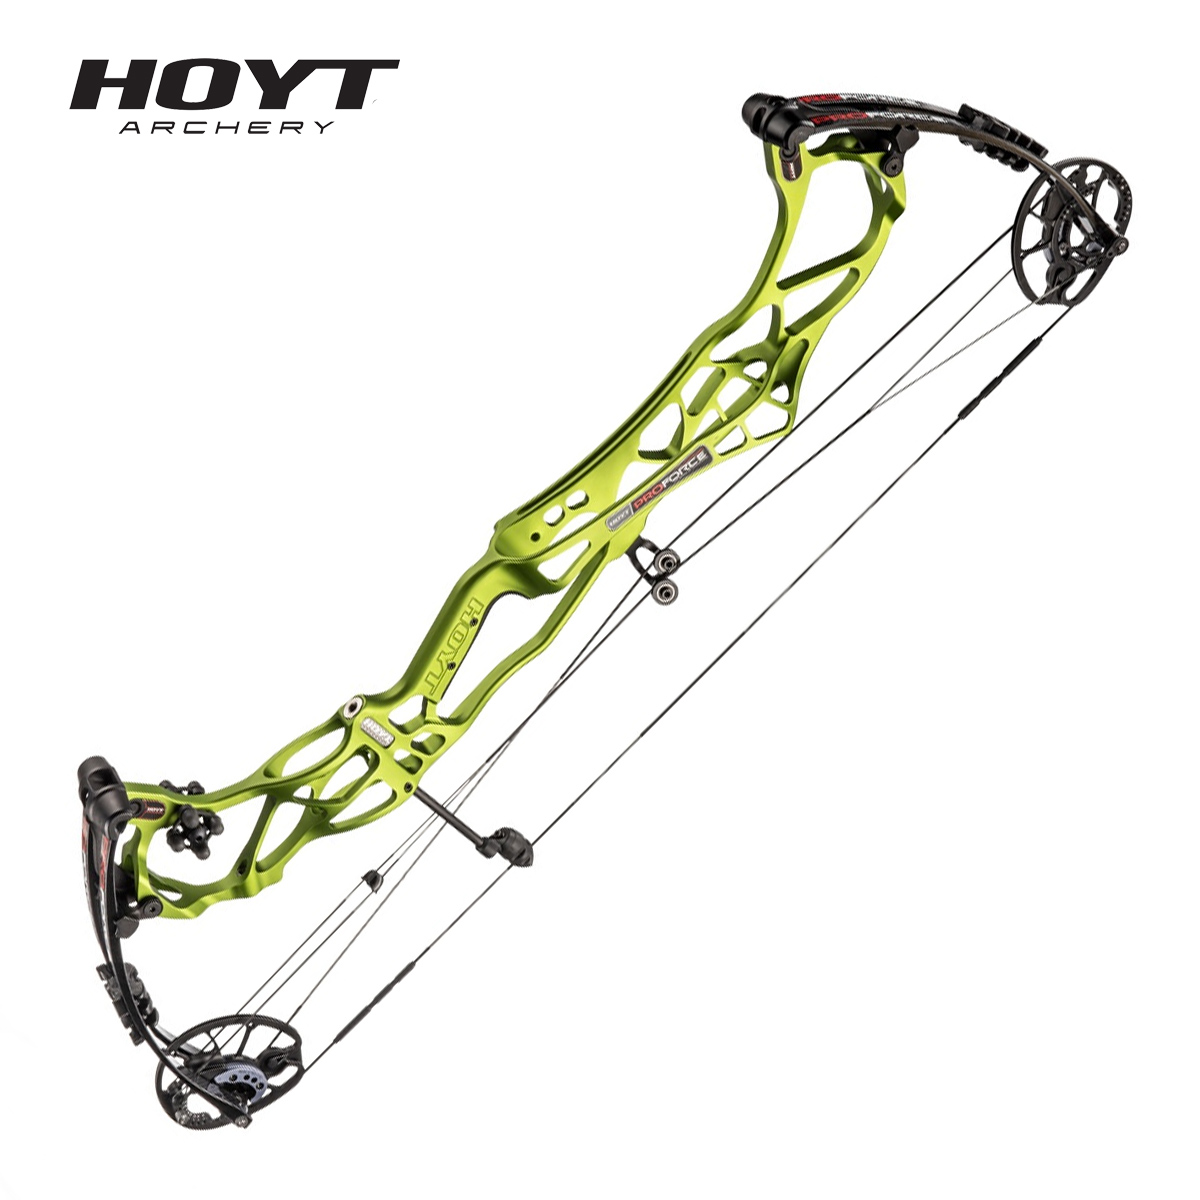 HOYT HYPER EDGE COMPOUND BOW Archery